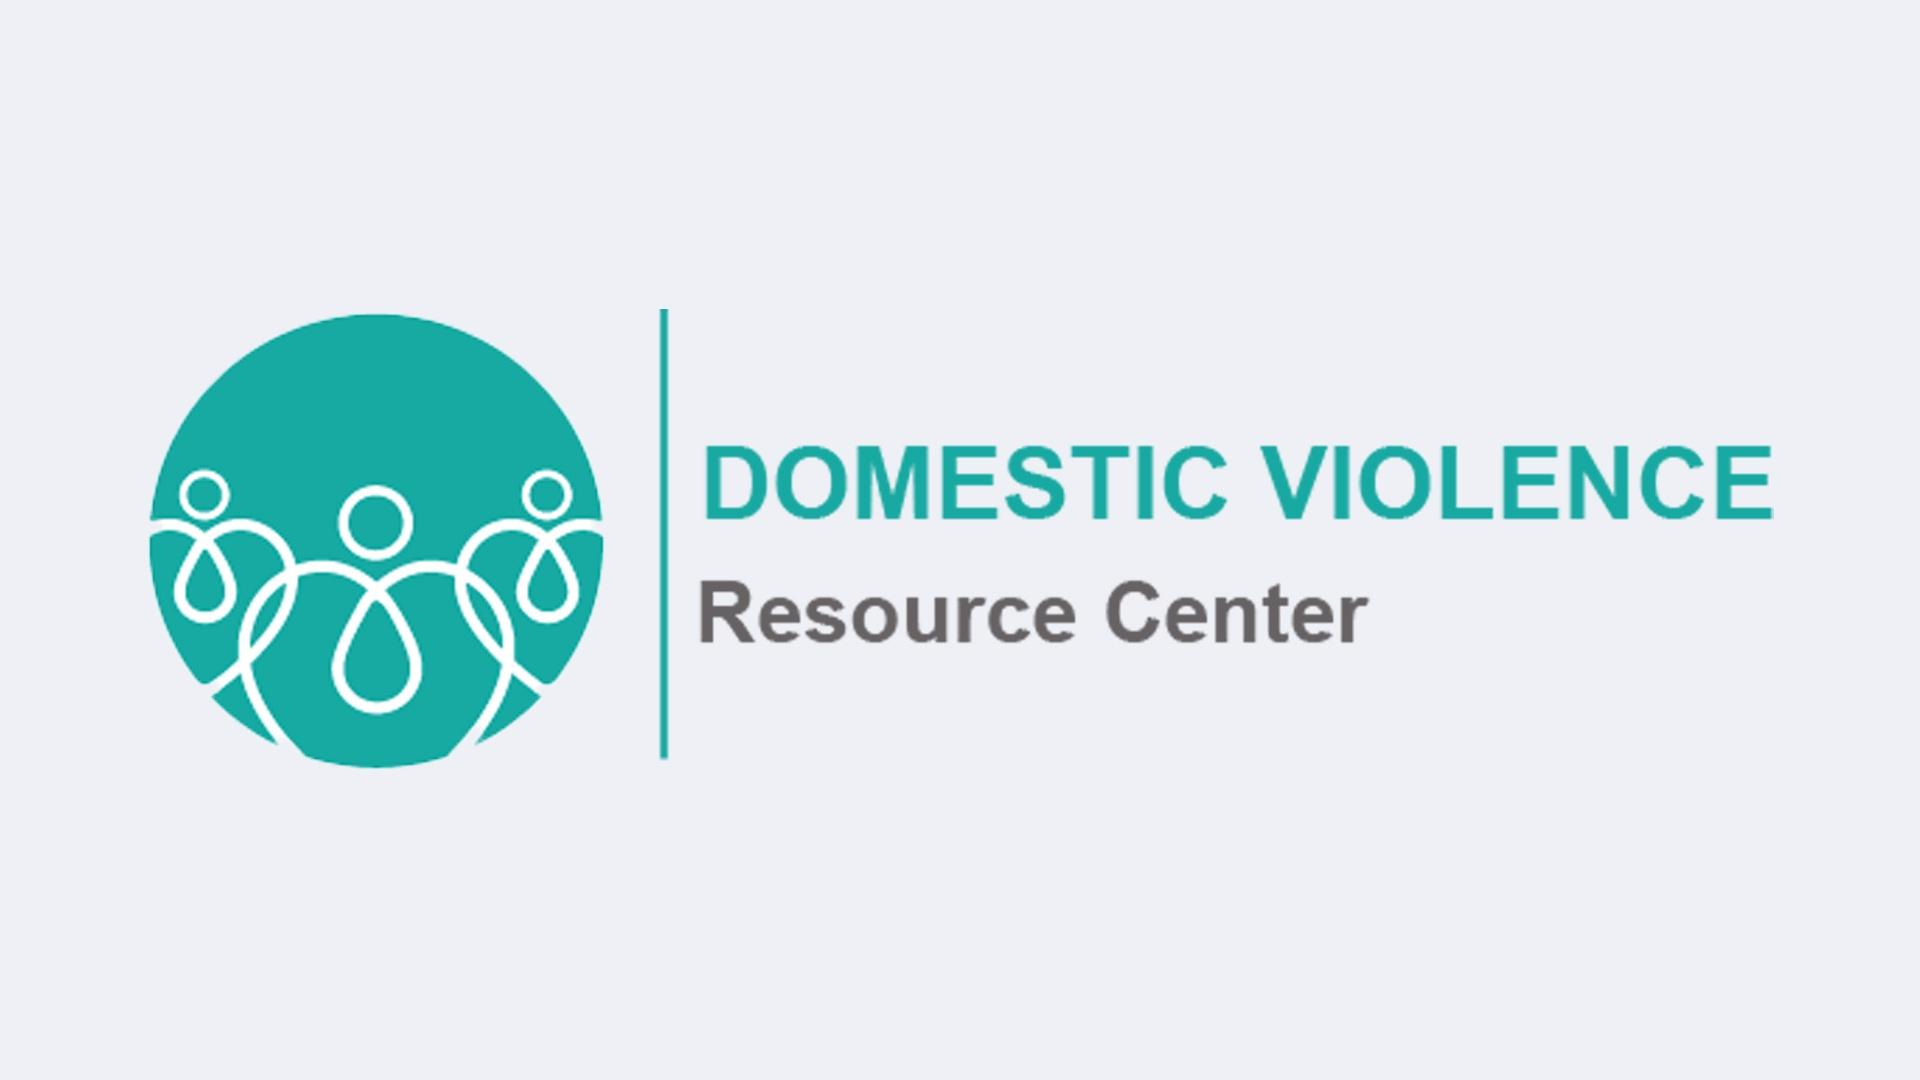 Domestic Violence Resource Center